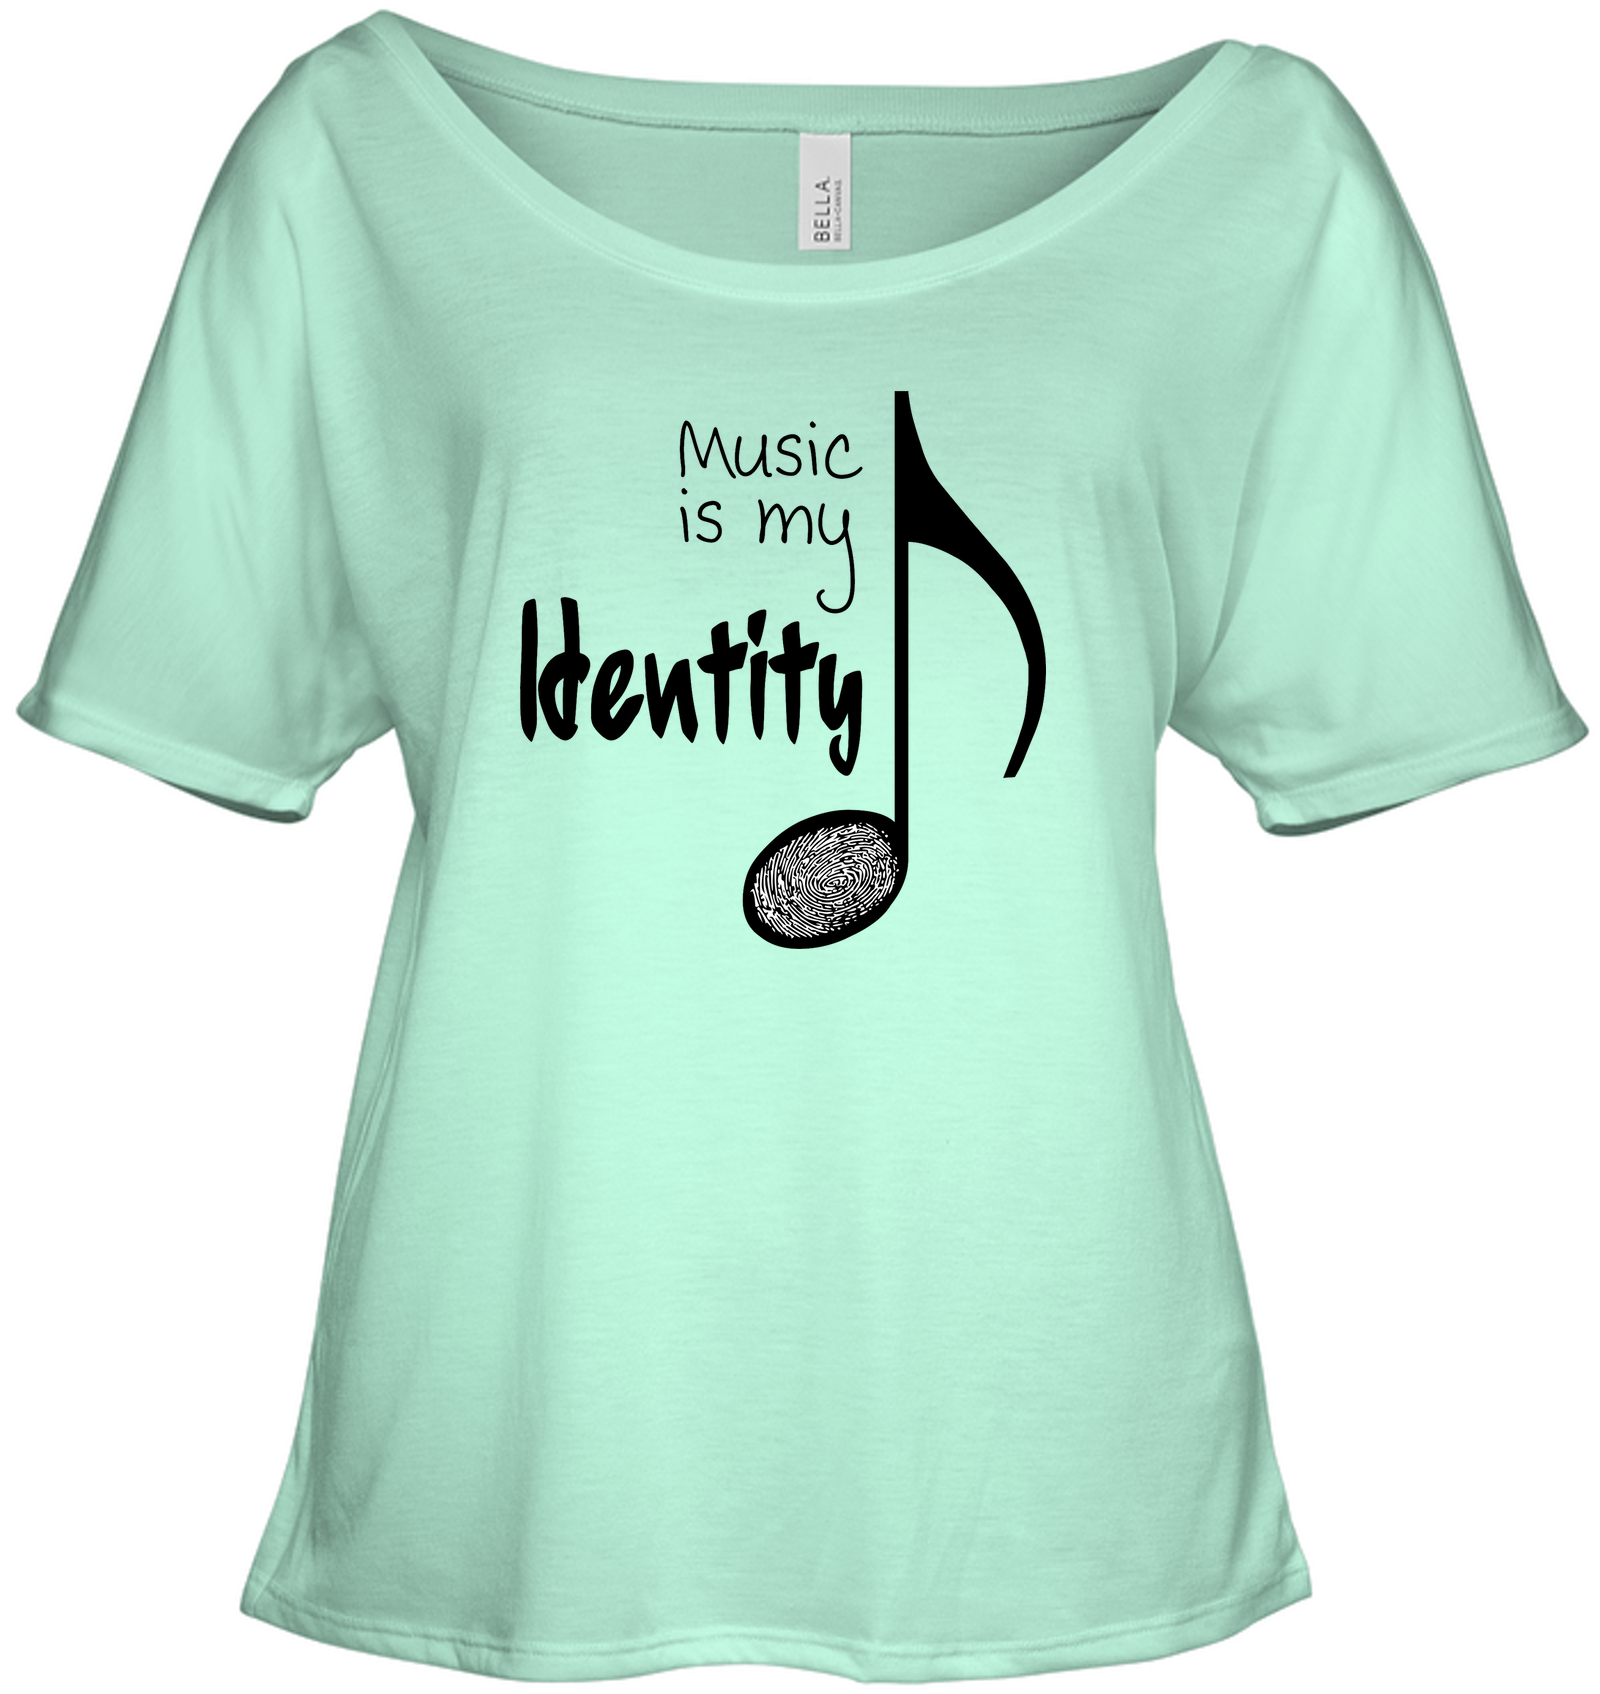 Music is my Identity - Bella + Canvas Women's Slouchy Tee